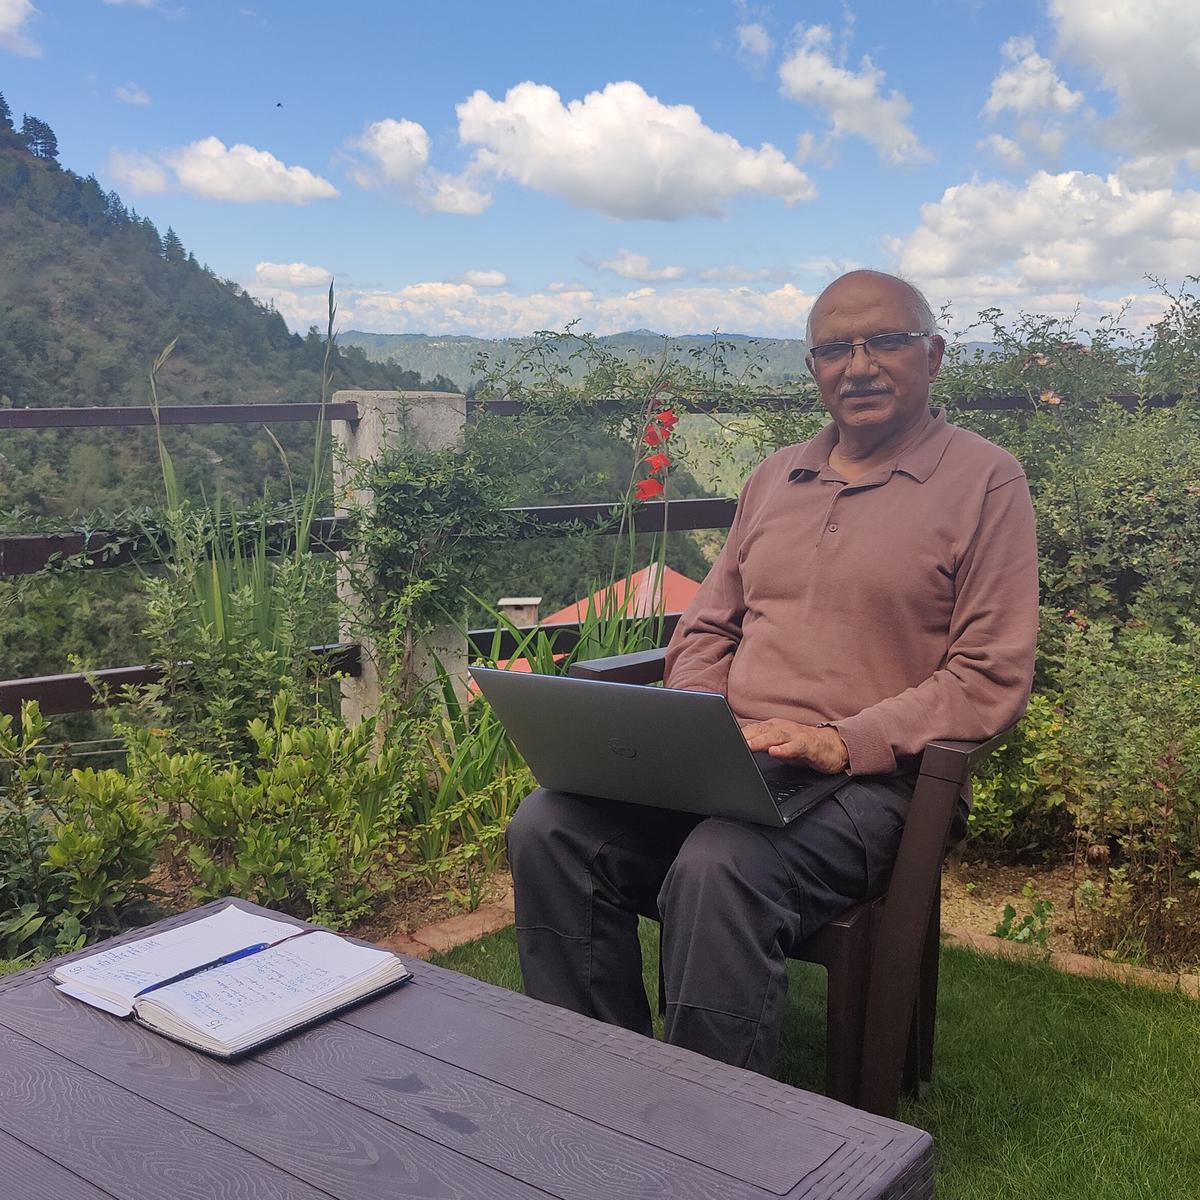 RK Thukral, editor of the book and director, Datanet working remotely at Mukteshwar, Uttarakhand